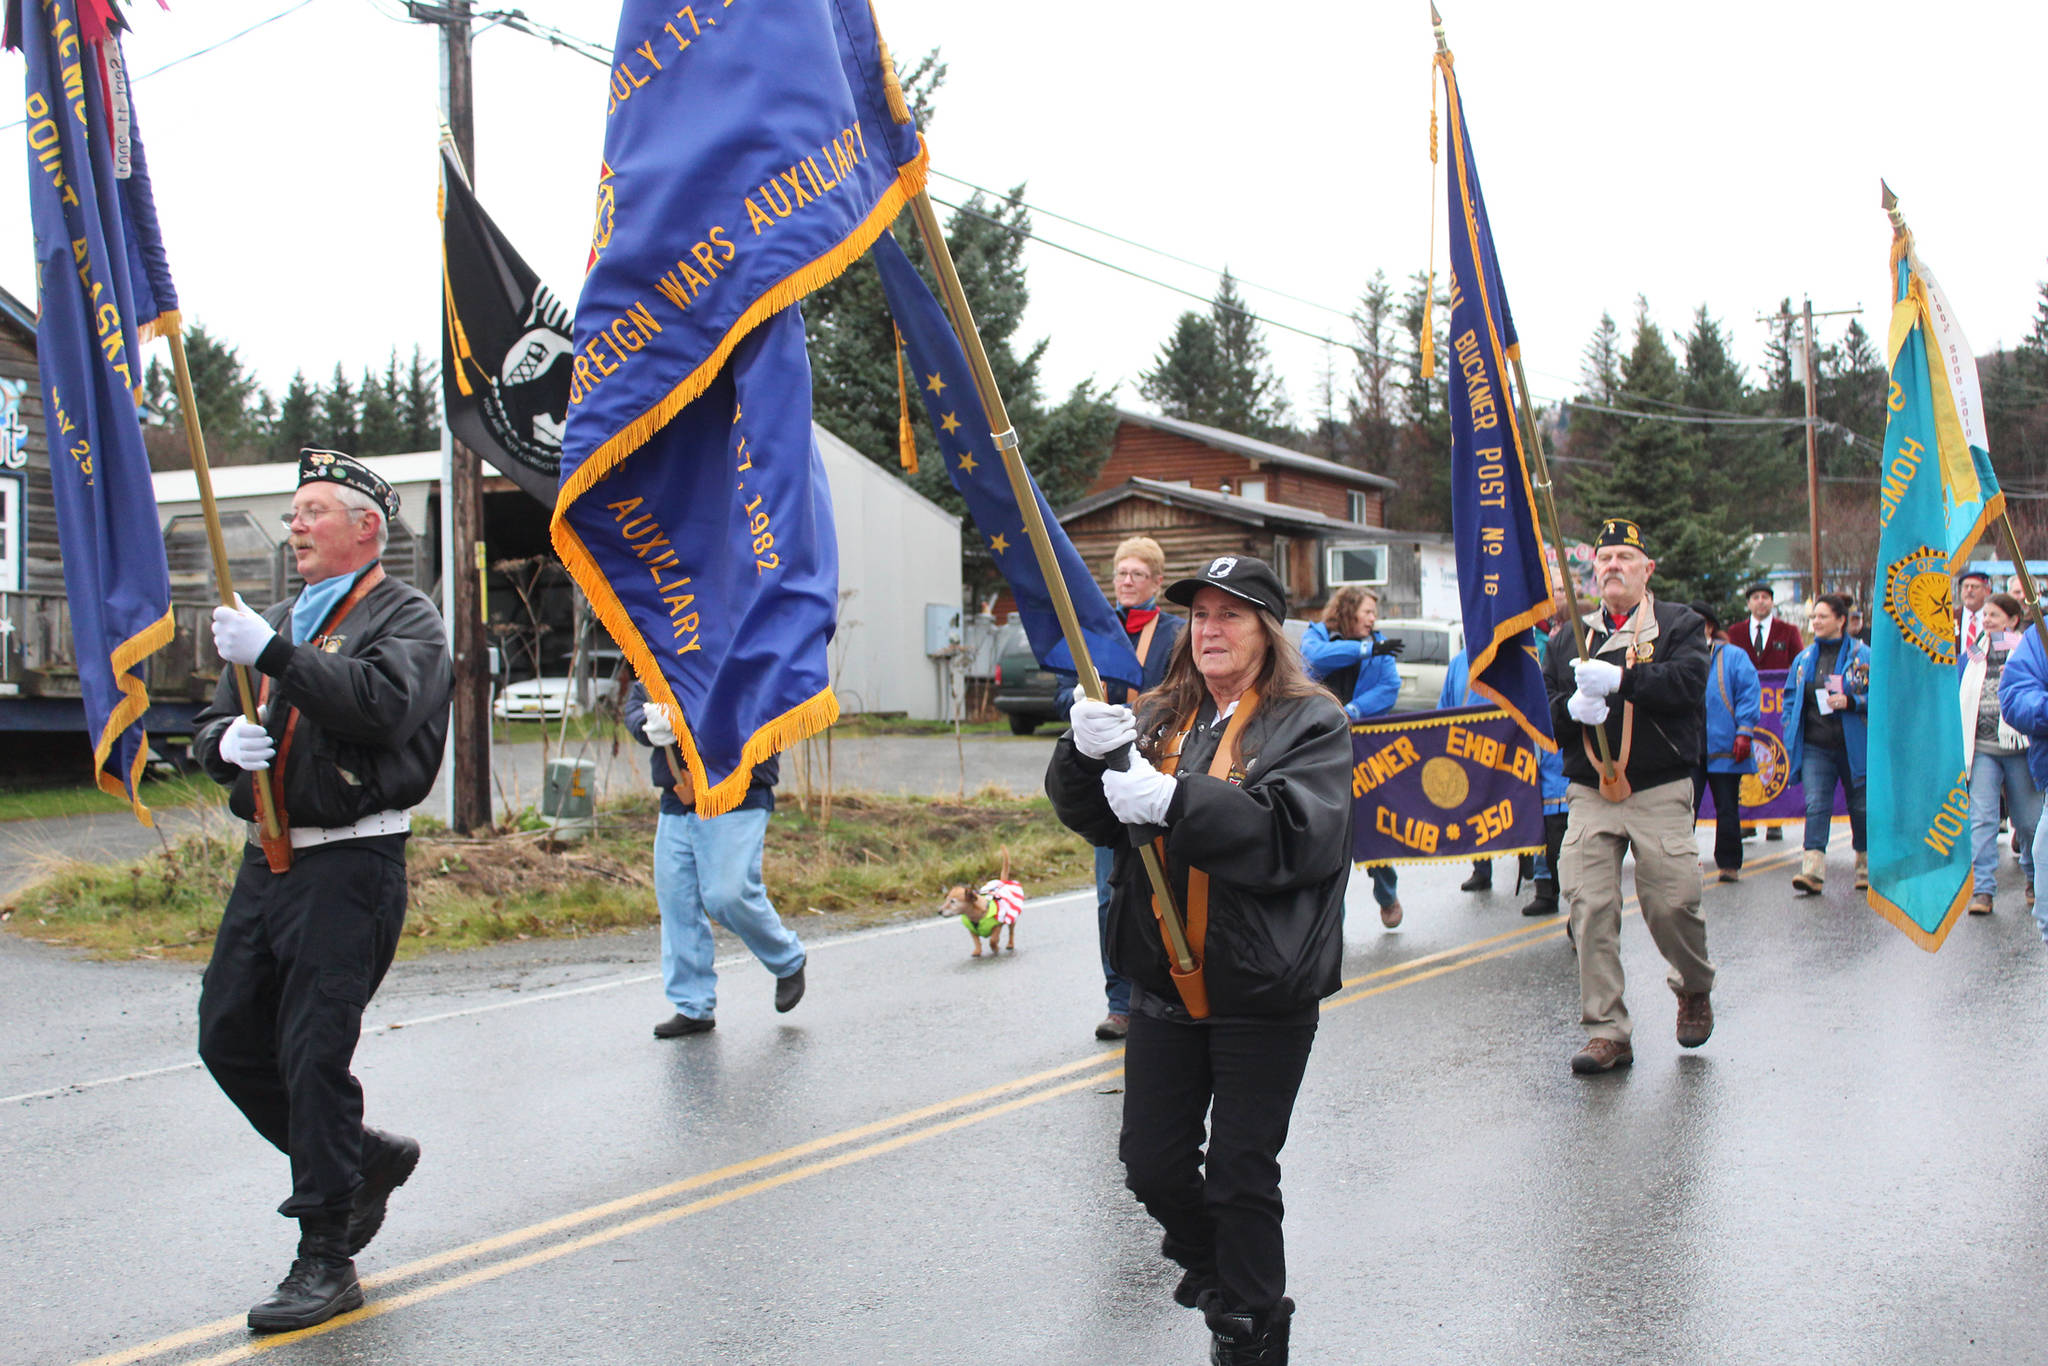 Members of veterans organizations march down Main Street in a Veterans Day parade Sunday, Nov. 11, 2018 in Homer, Alaska. (Photo by Megan Pacer/Homer News)